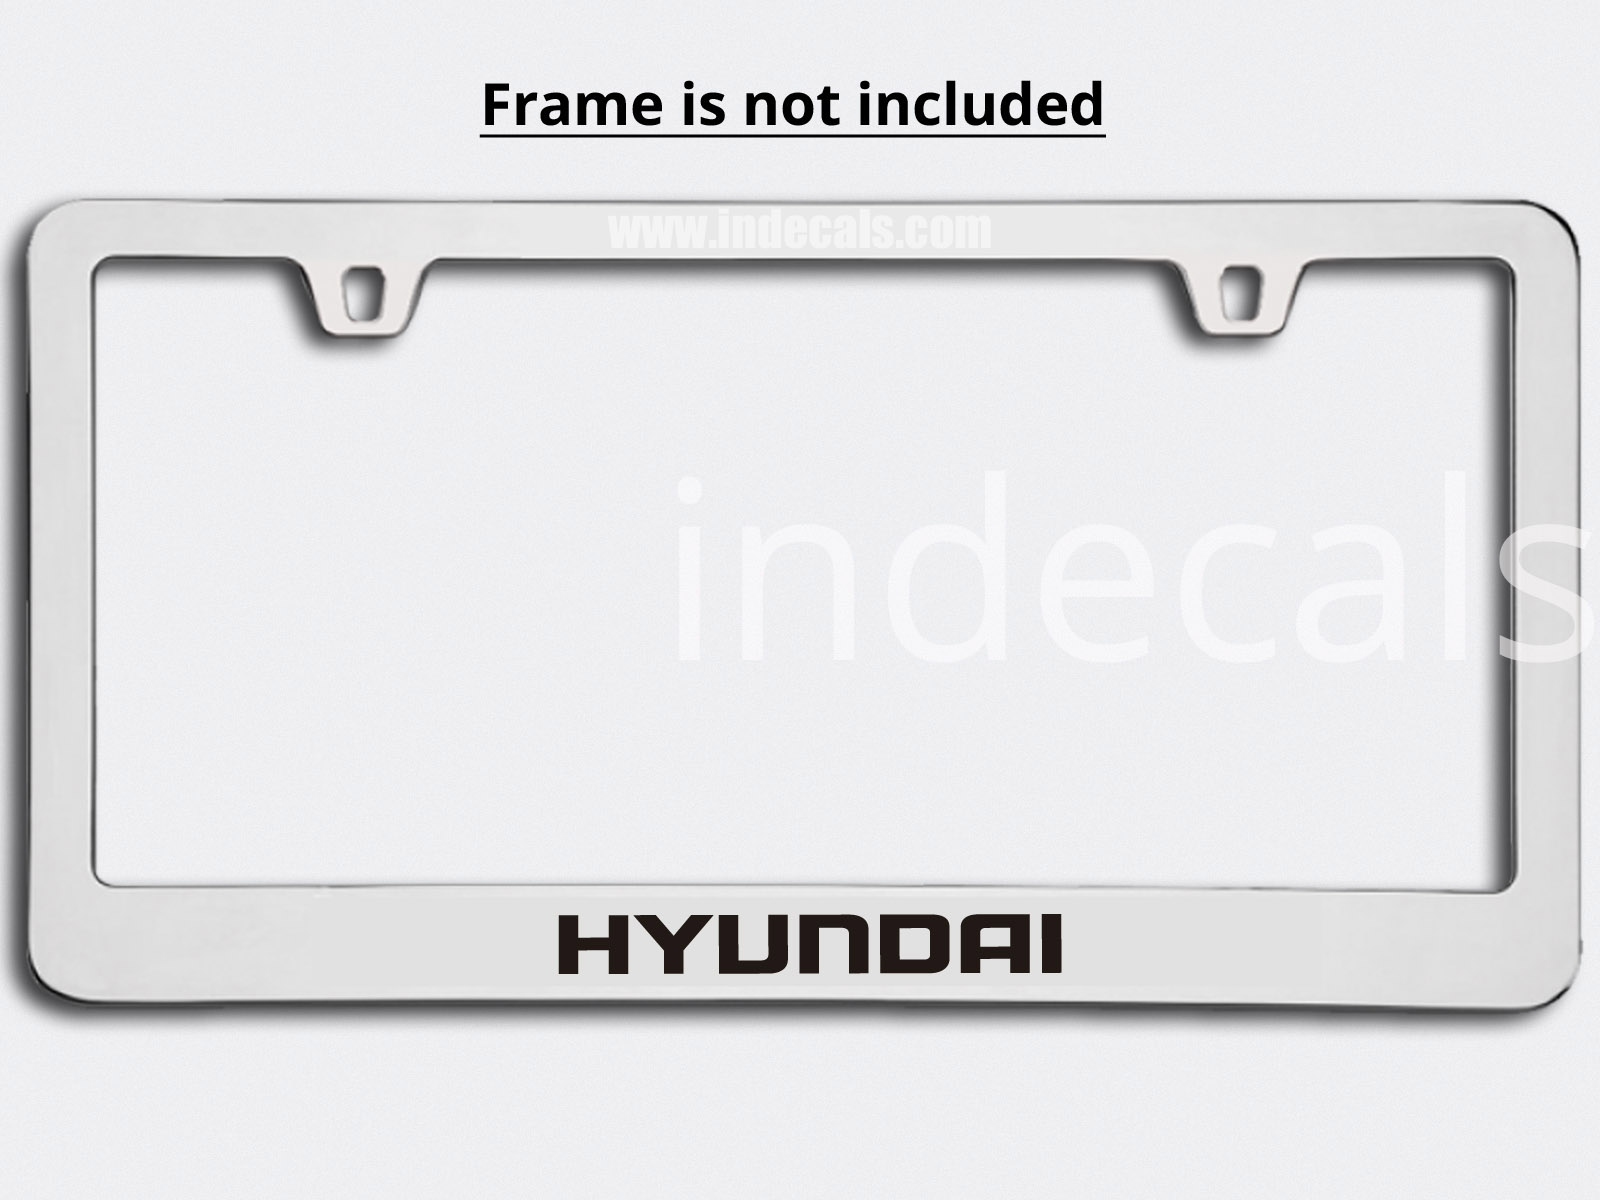 3 x Hyundai Stickers for Plate Frame - Black